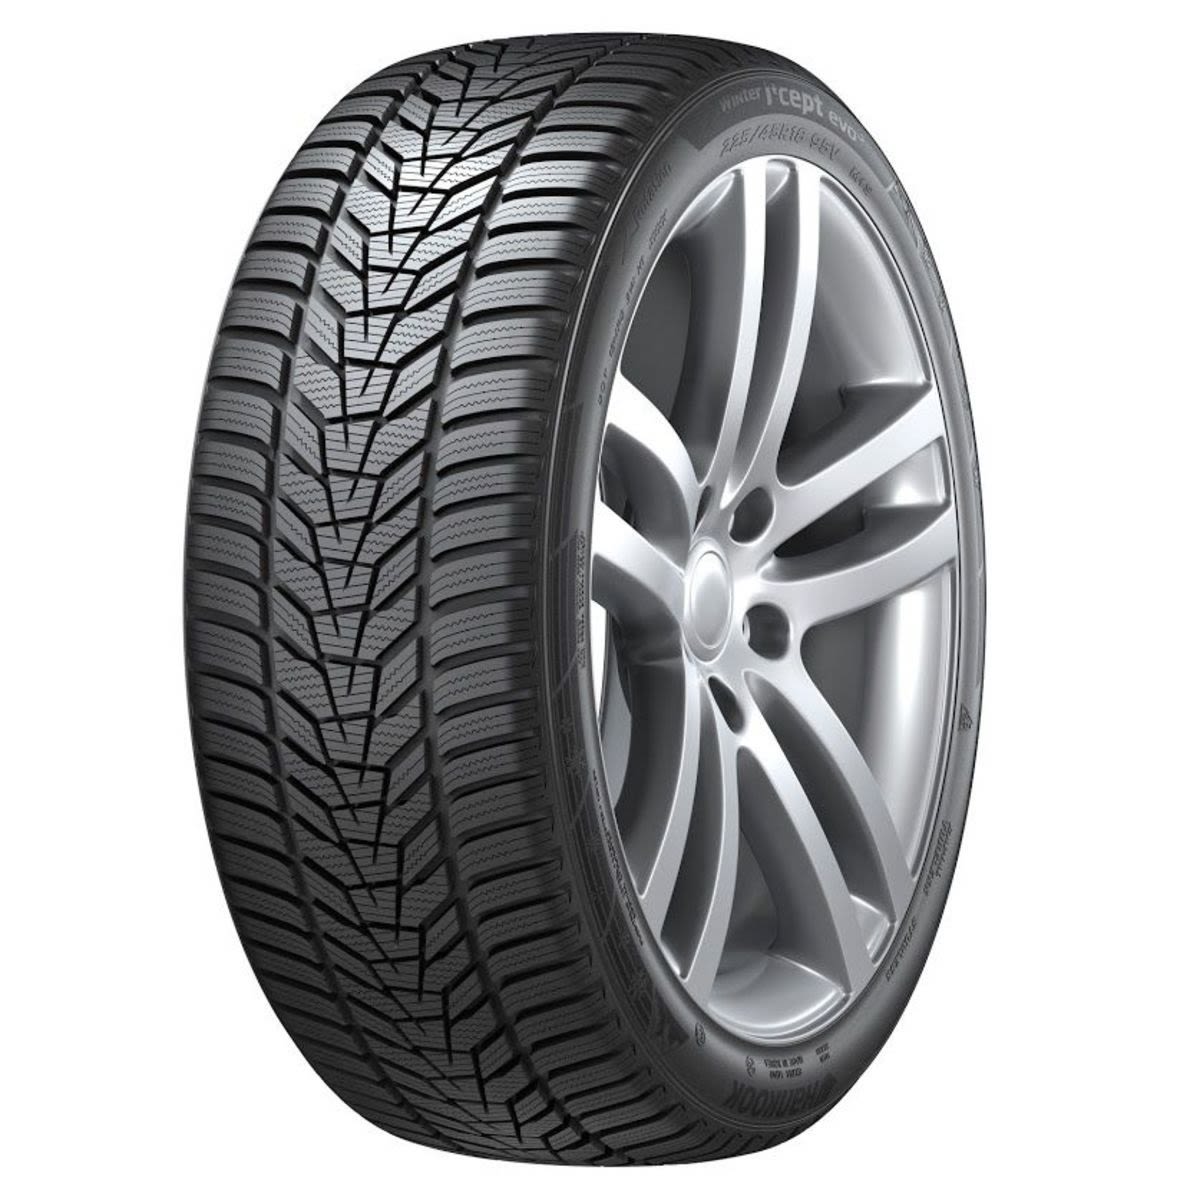 Neumáticos de invierno HANKOOK Winter i*cept evo3 W330 255/35R18 XL 94V